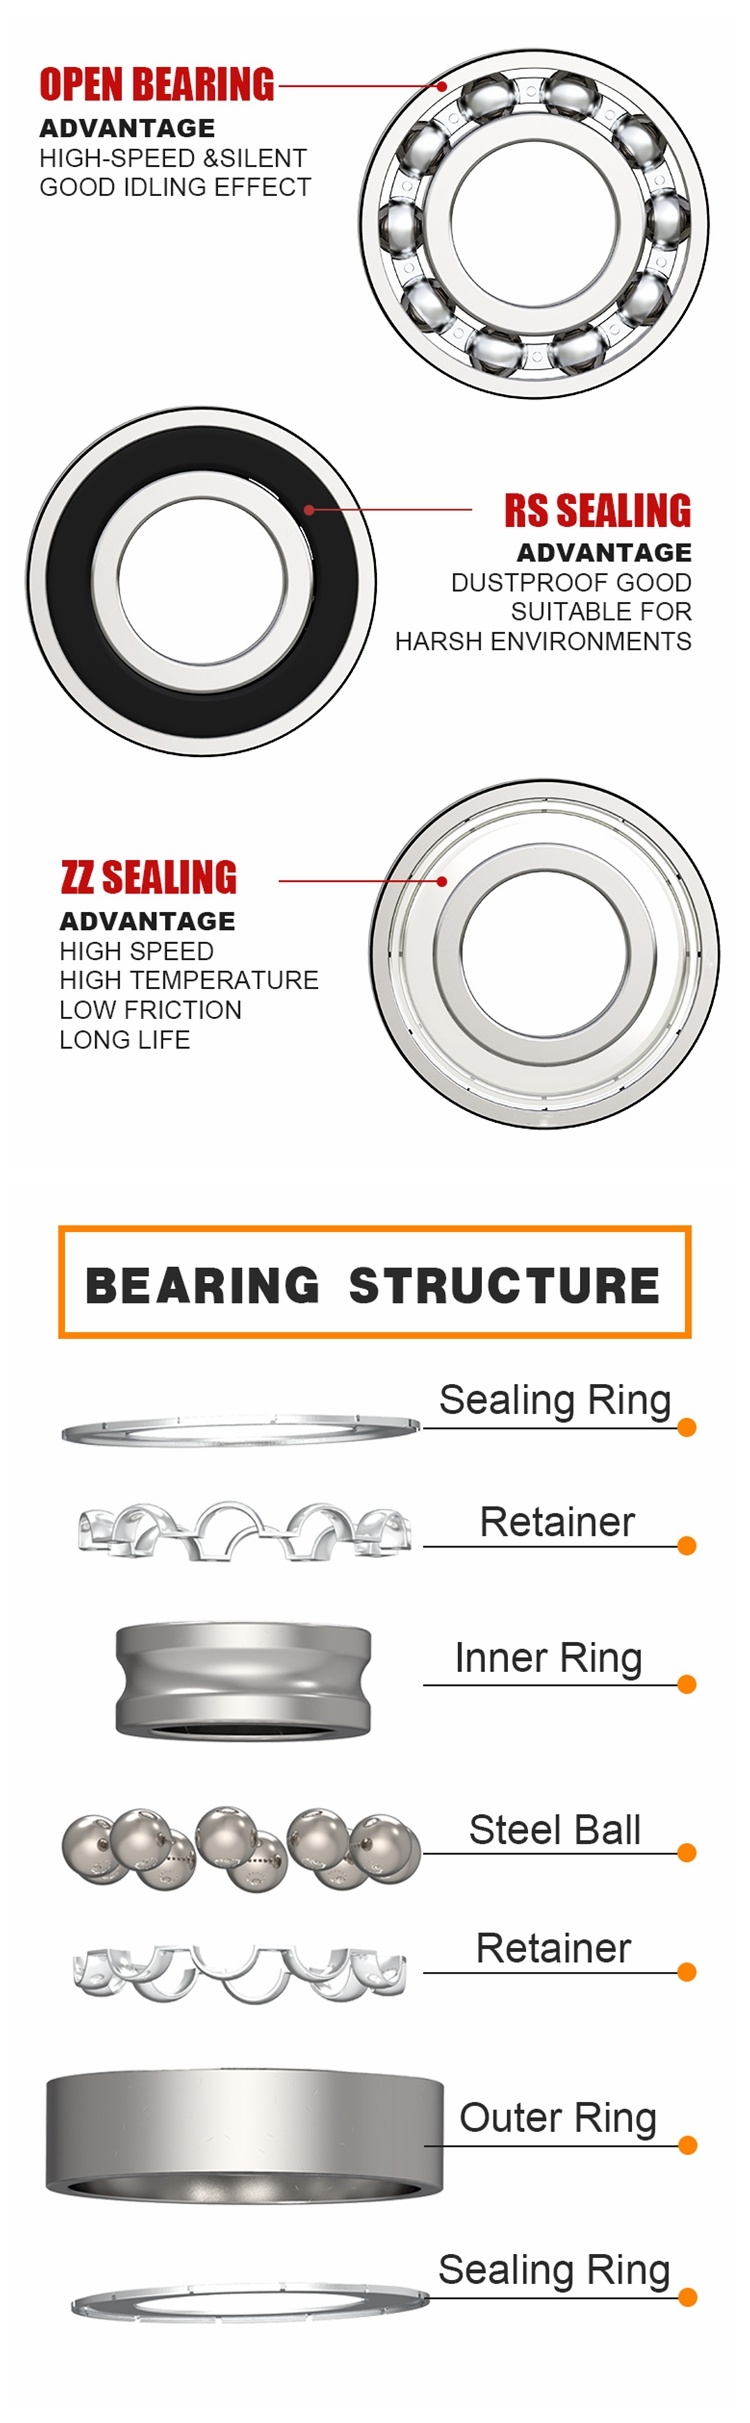 ABEC-3 Motor Bearing Steel Cover 6916 Zz Ball Bearings